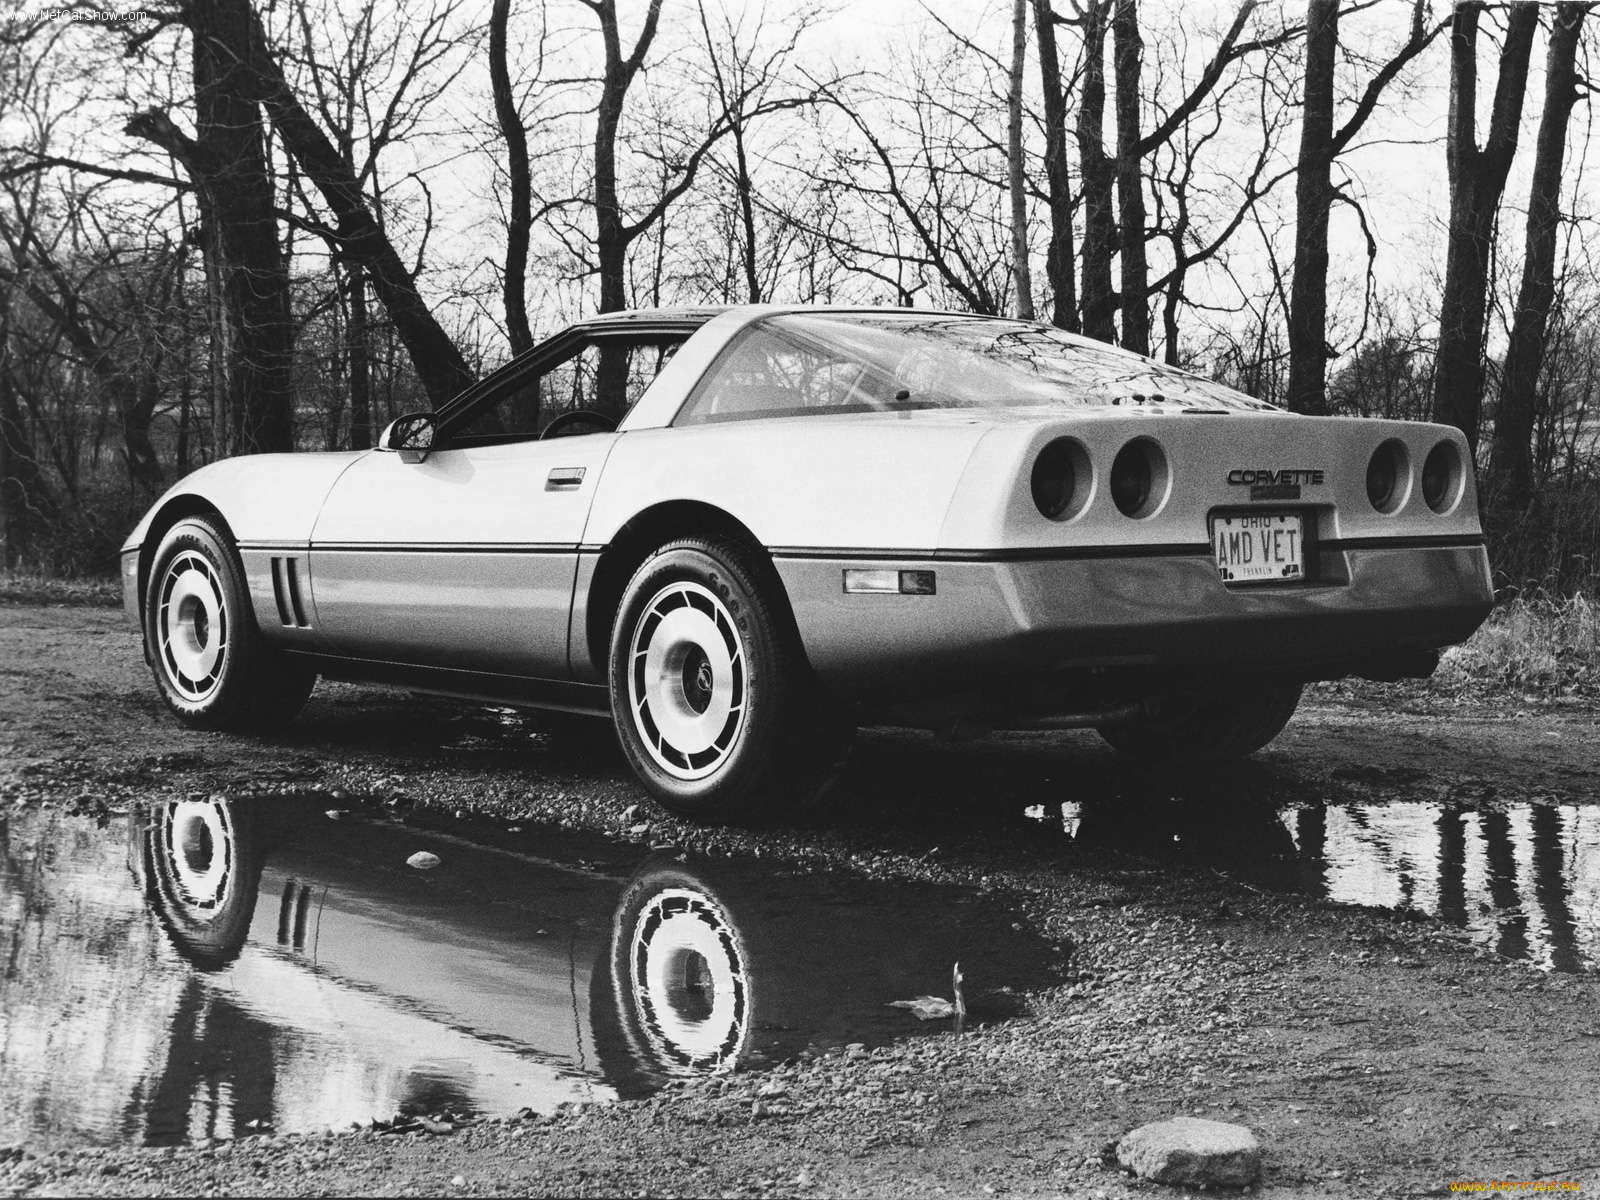 chevrolet, corvette, c4, 1983, автомобили